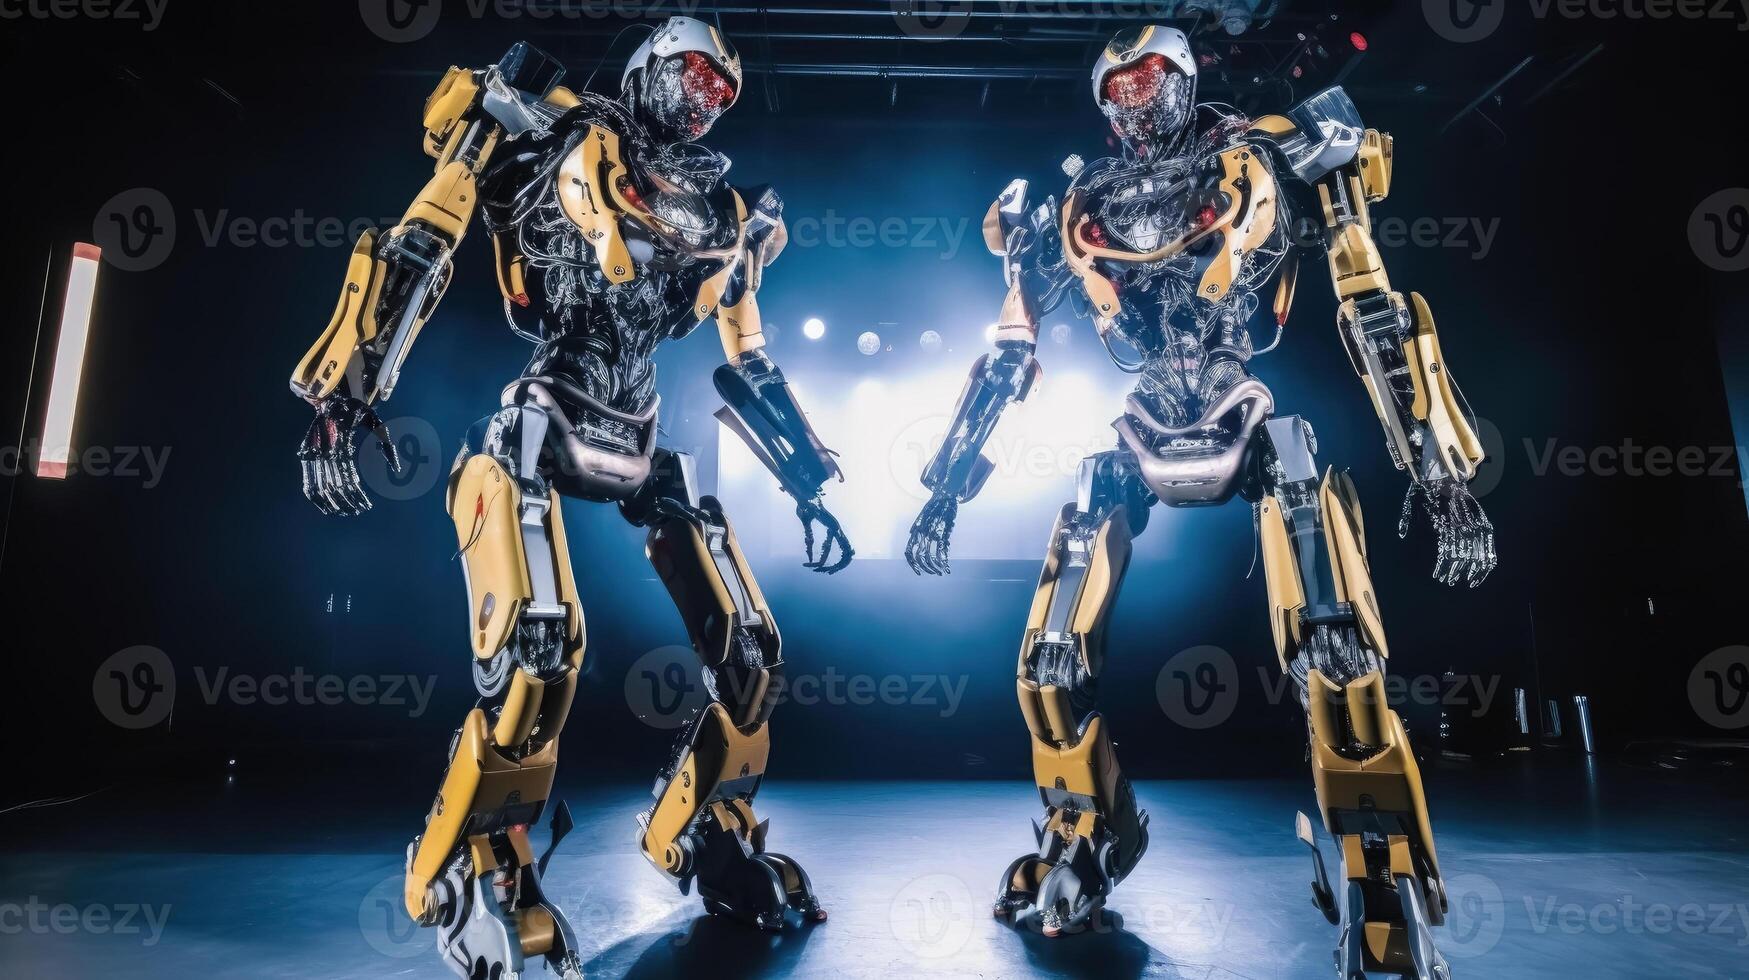 robots danza a un Club nocturno. ai generado foto